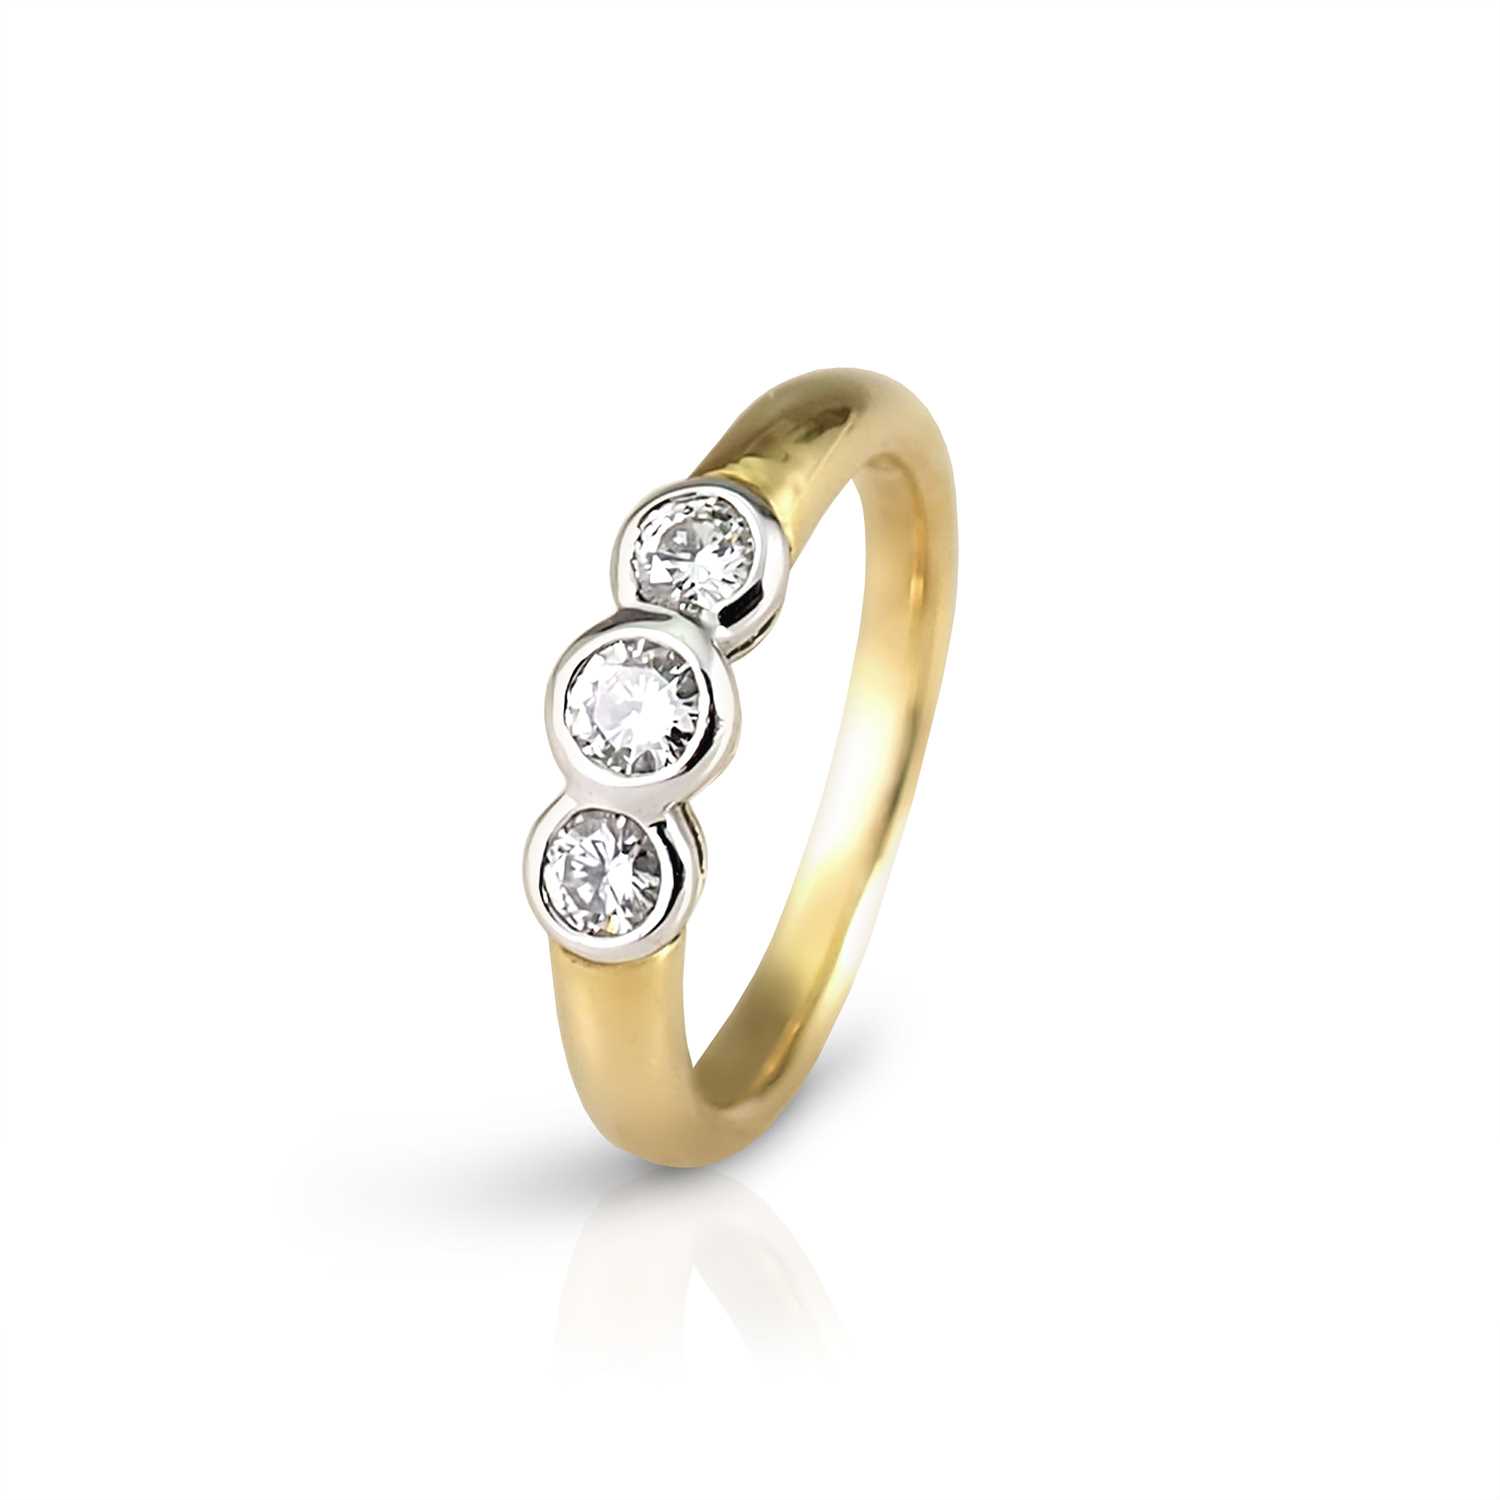 Lot 535 - 18K Gold Diamond Ring